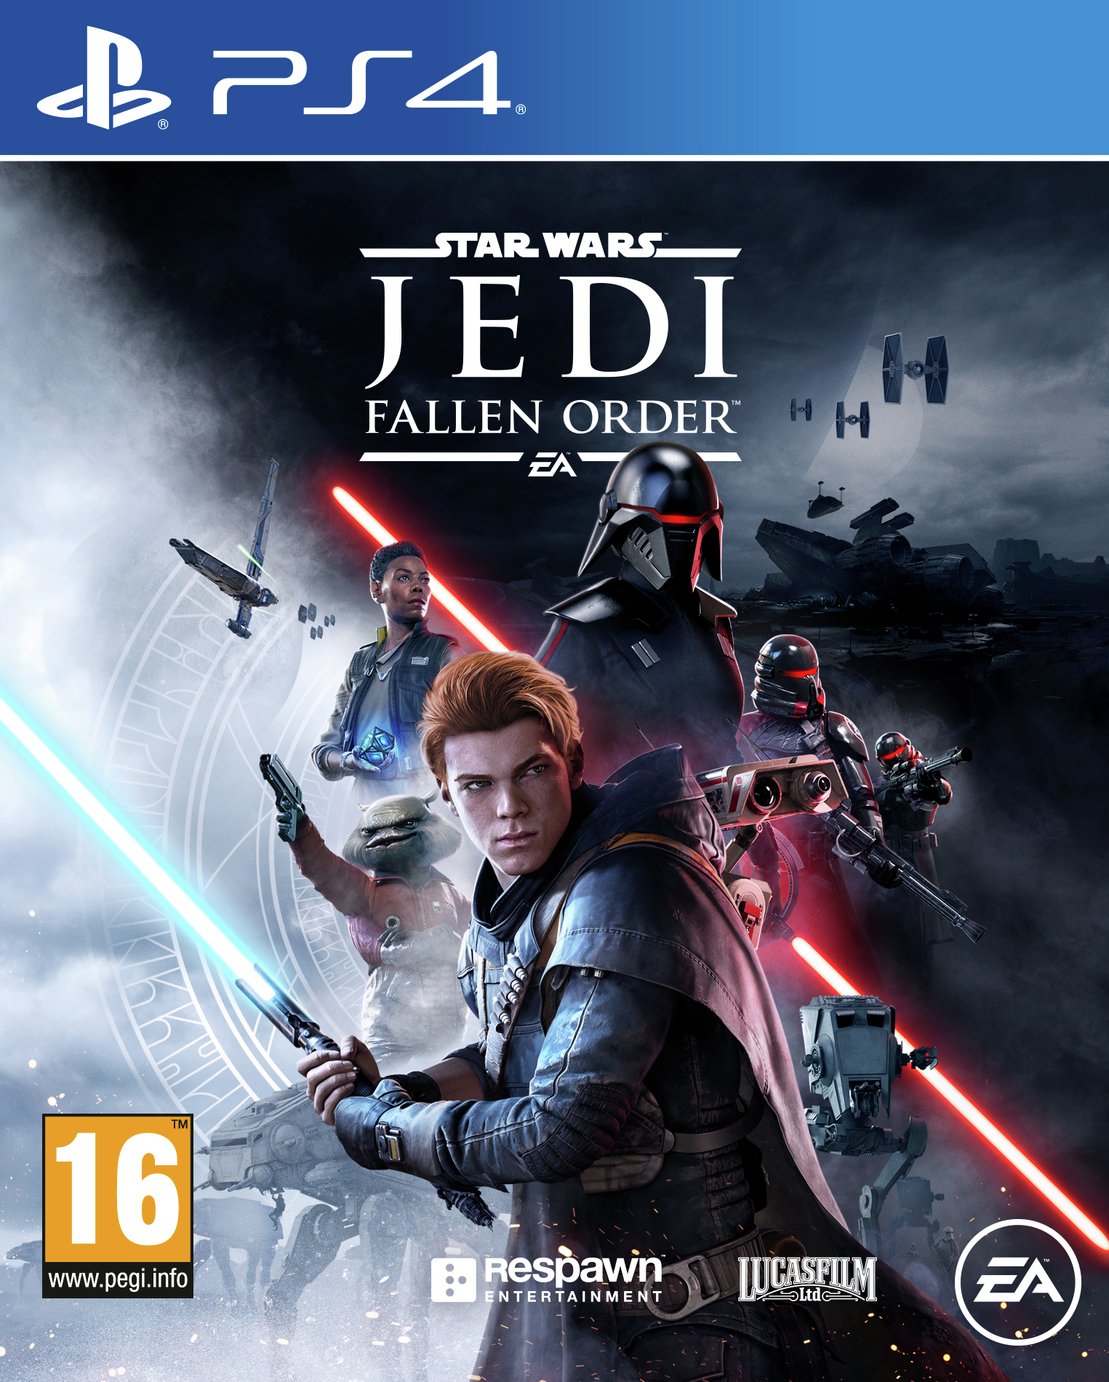 Star Wars Jedi Fallen Order PS4 PreOrder Game Reviews